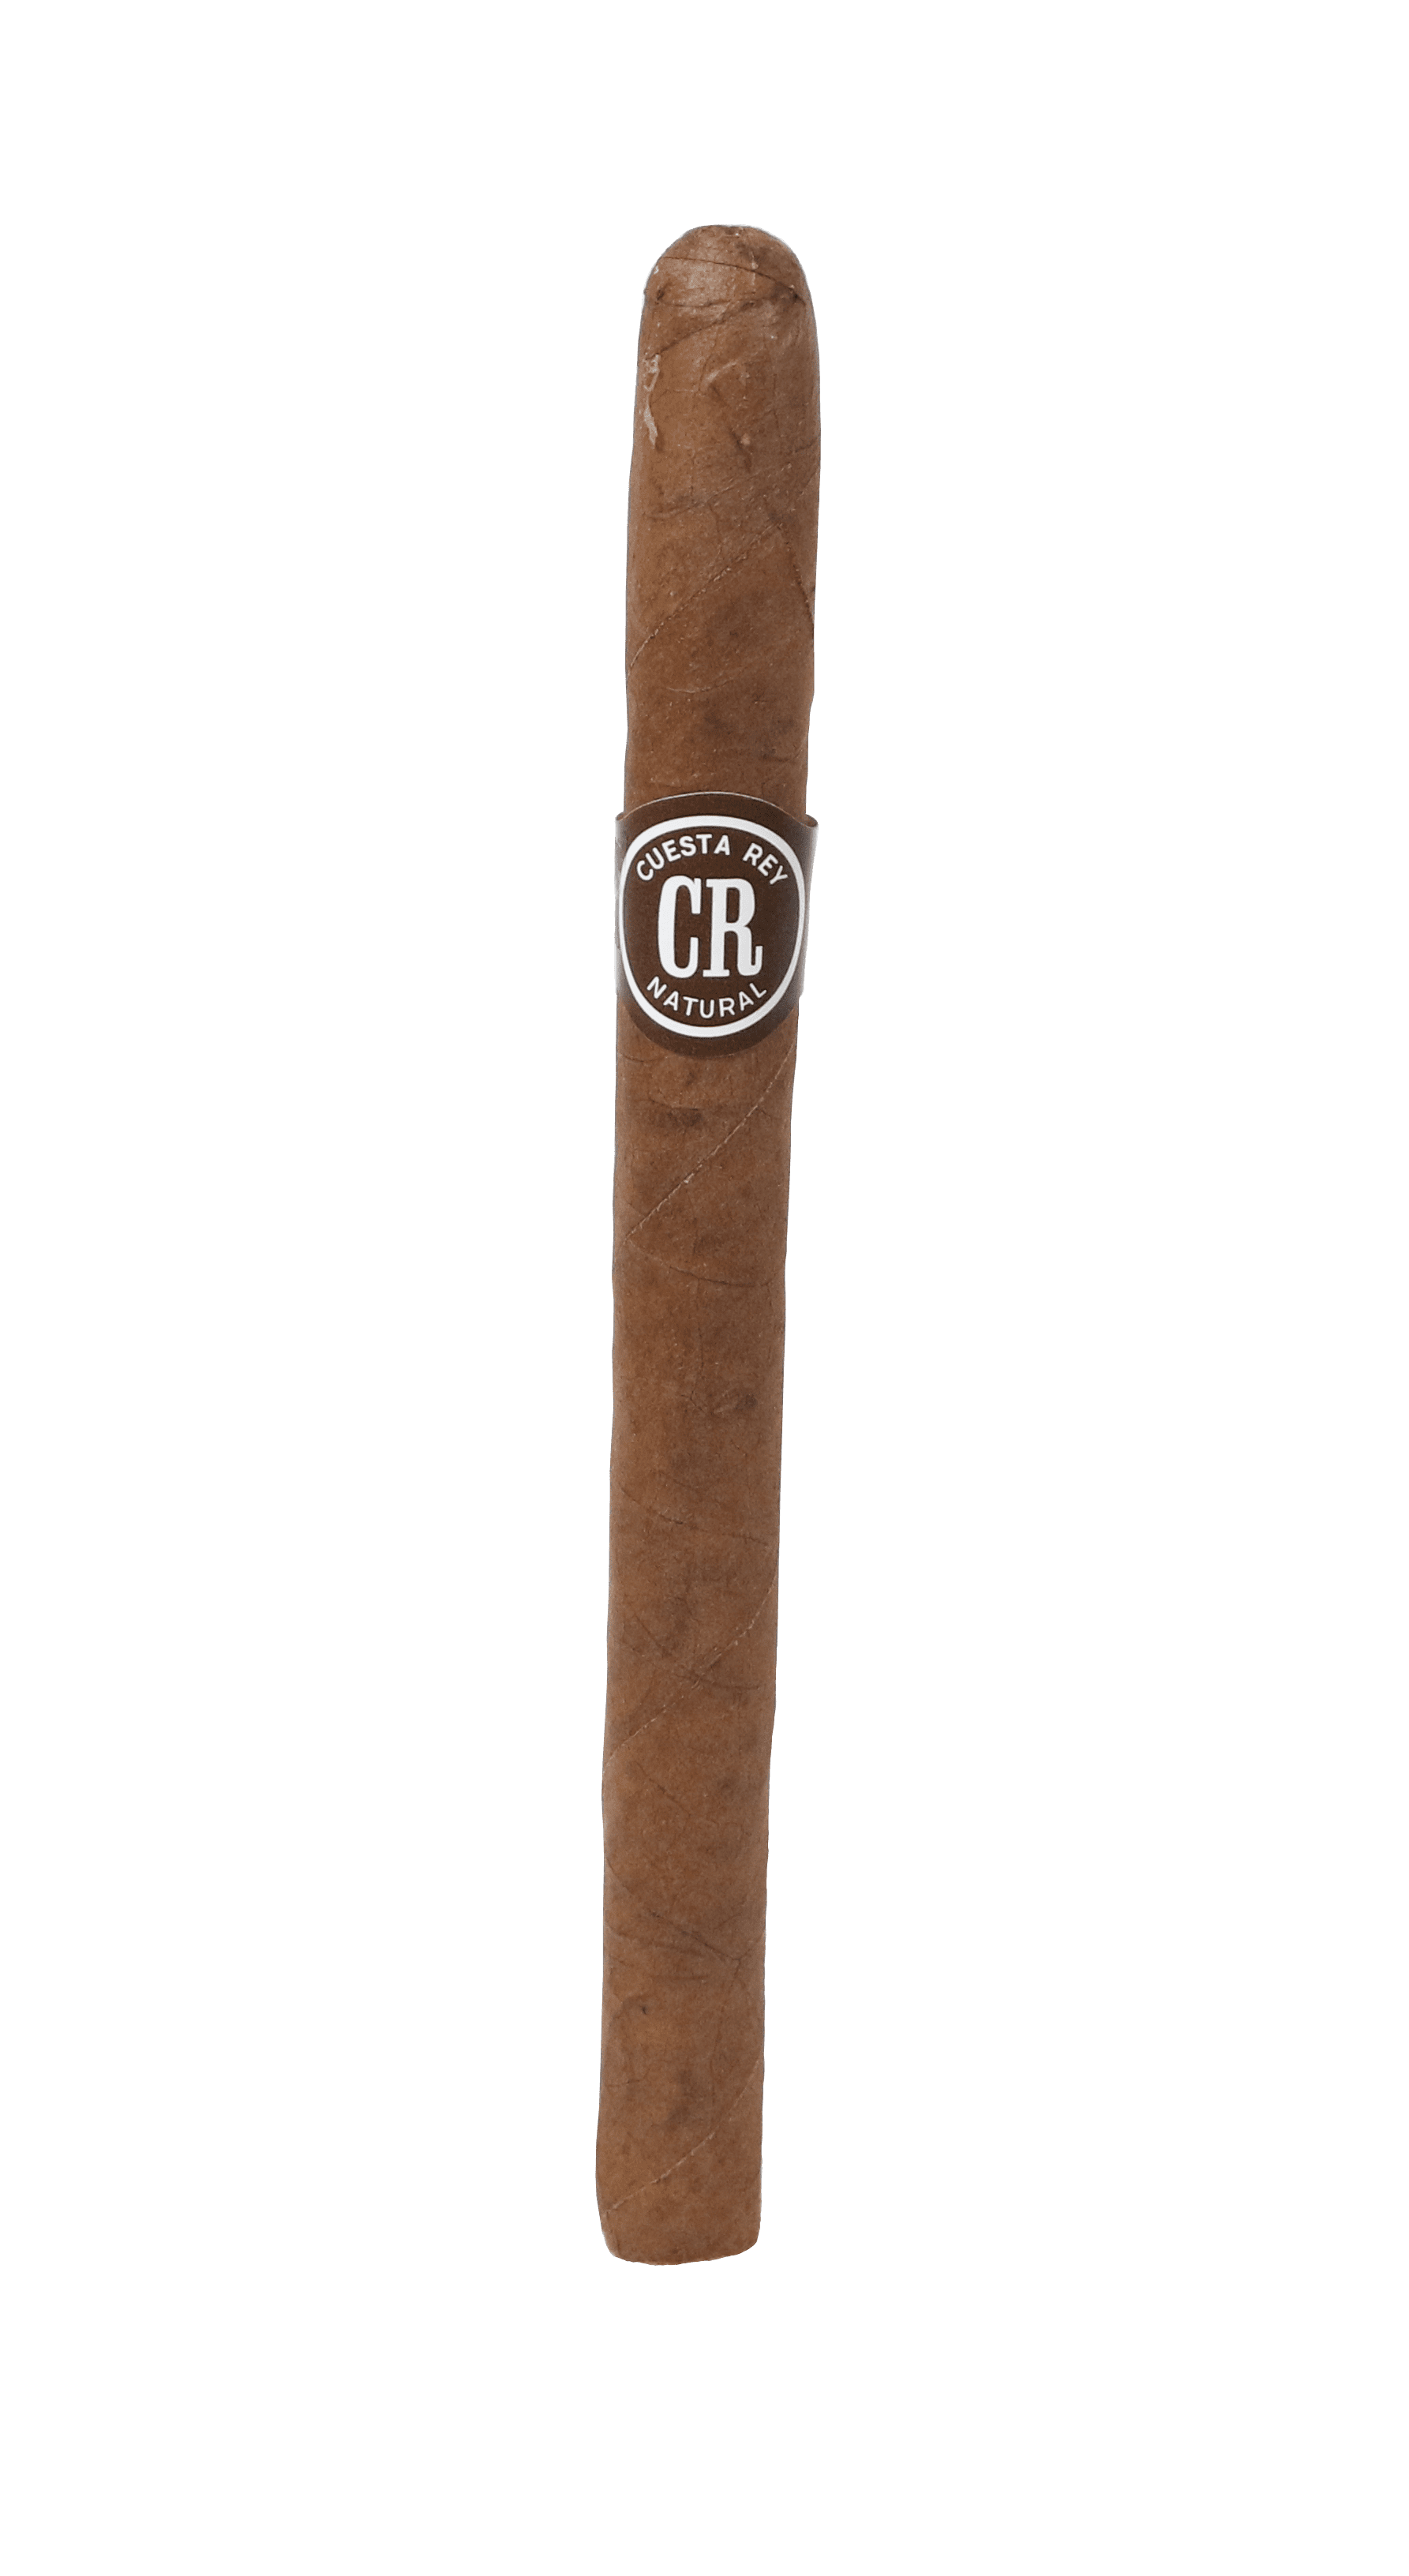 Single Cuesta Rey Caravelle Natural cigar